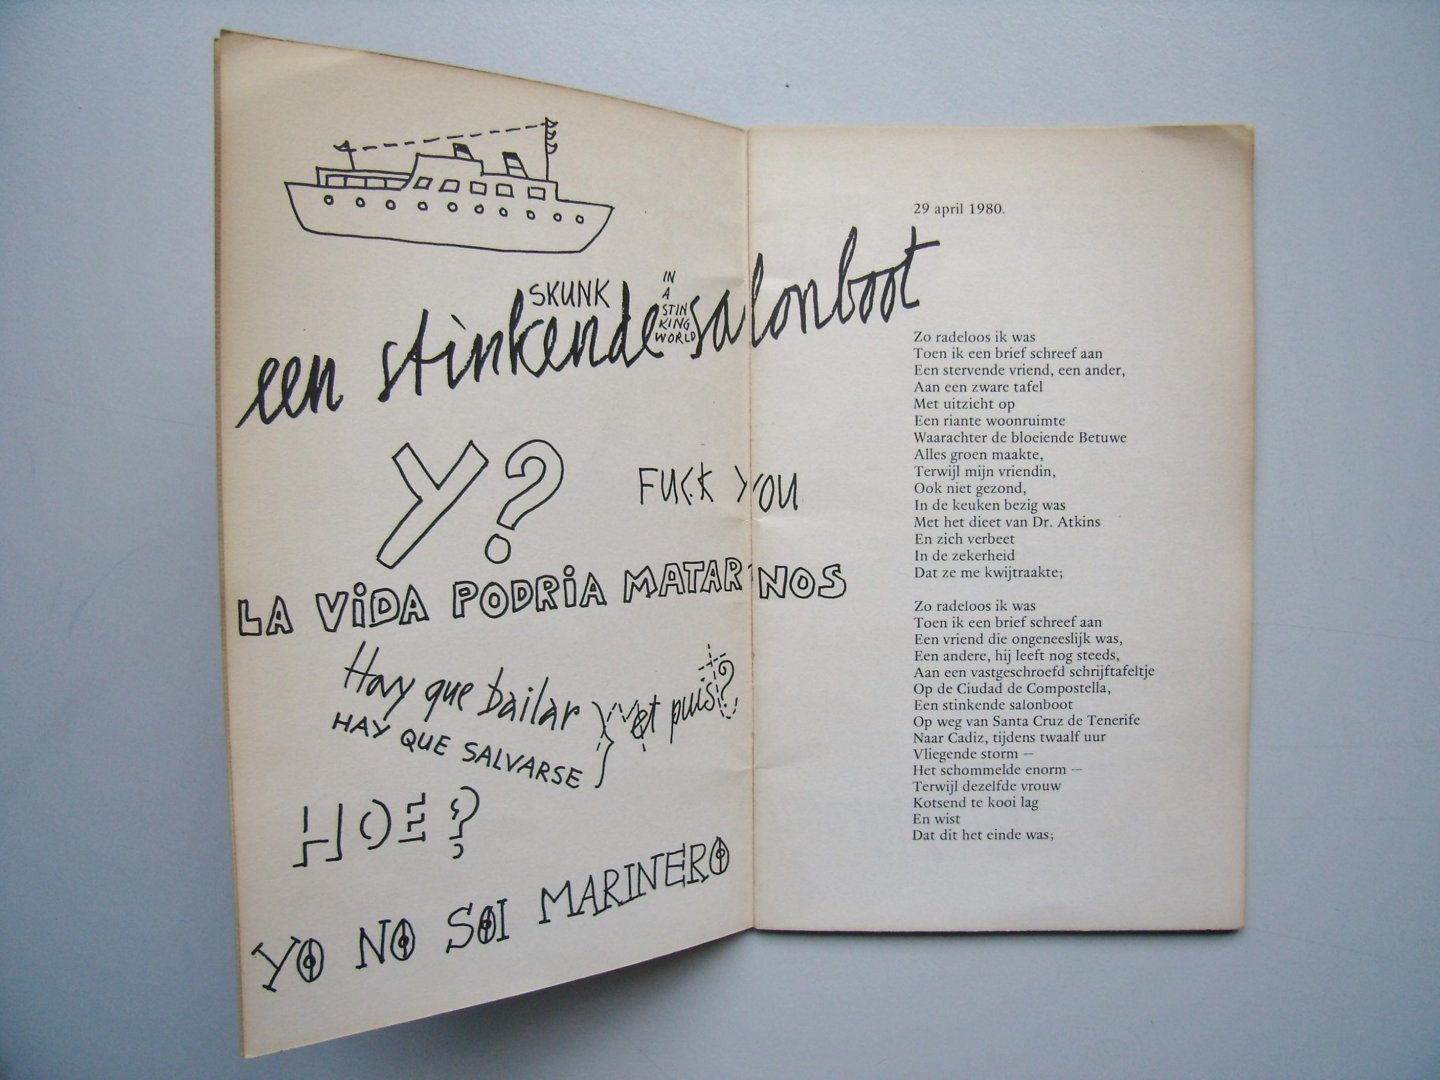 List, Lode / Vastbinder, Feike (ill.) / Stolk, Rob - Amsterdam 29 april - 6 mei 1980 Een cyclus van Lode List